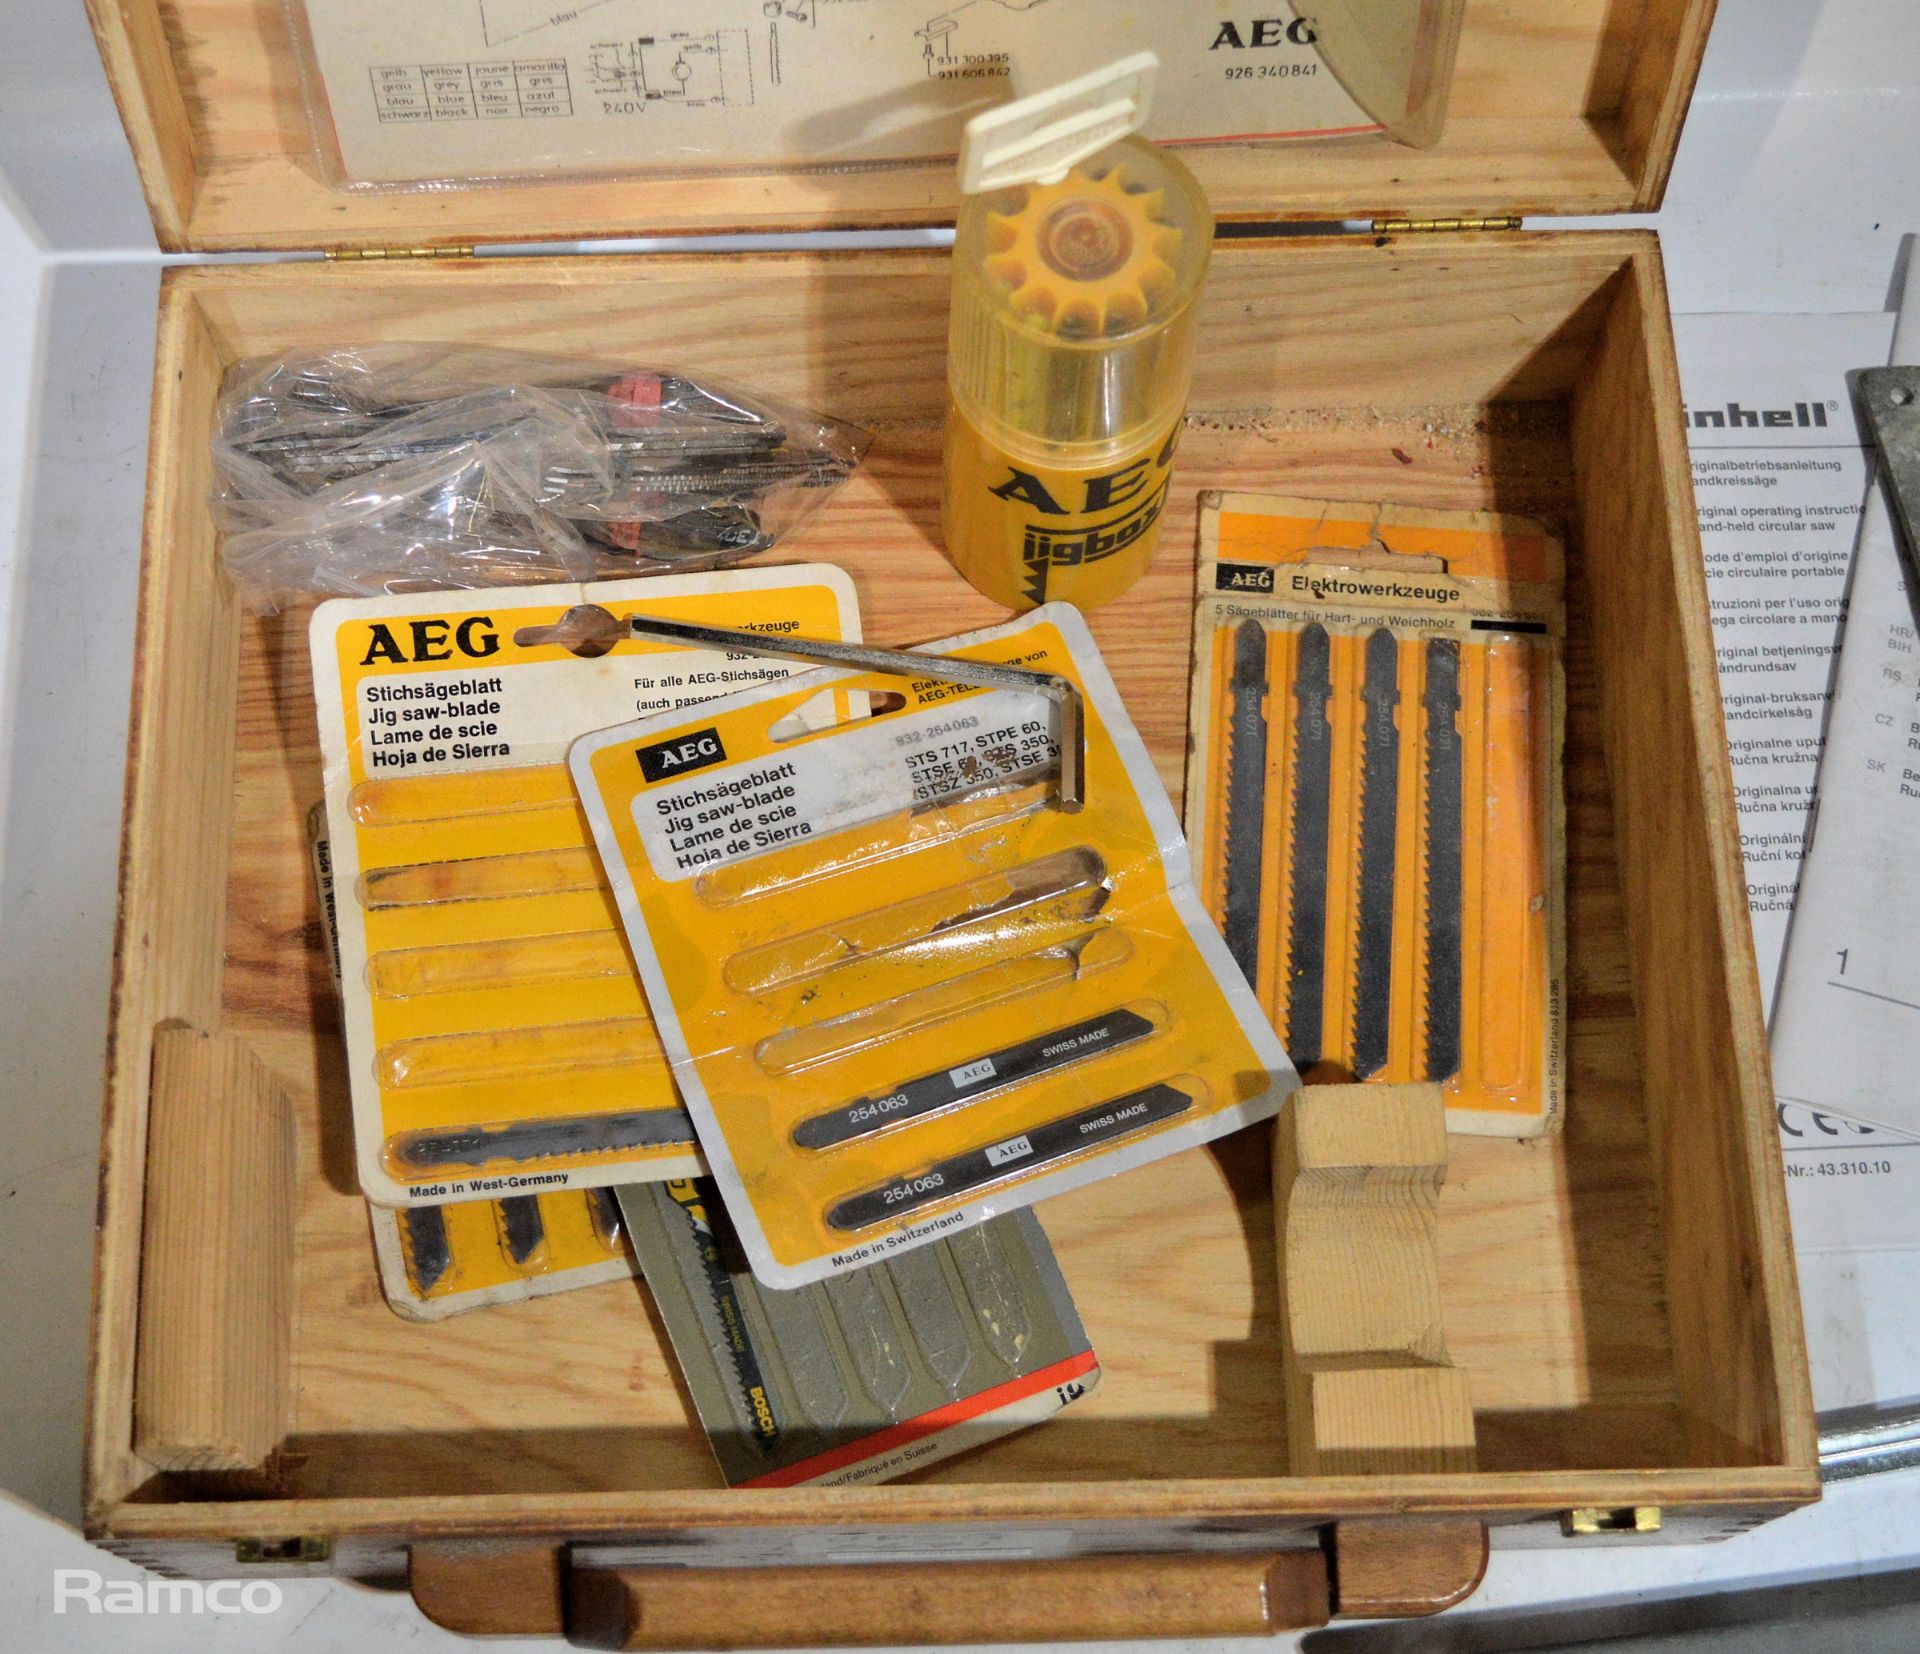 AEG STE 500 electric jigsaw - Image 3 of 5